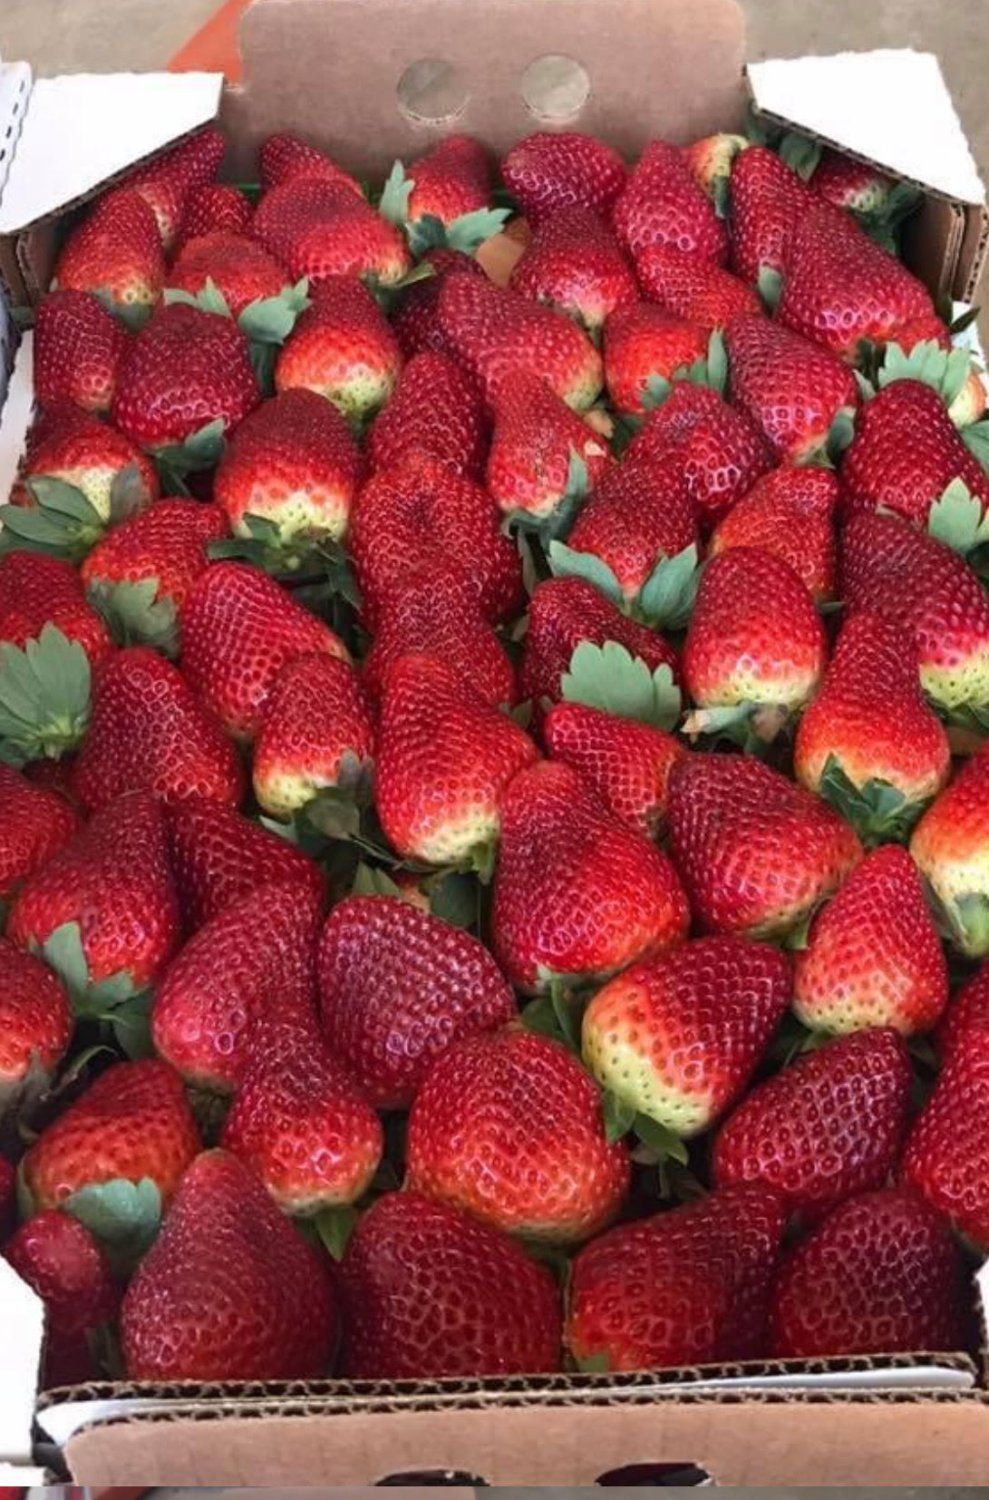 Next Happening: Strawberries Are Here!